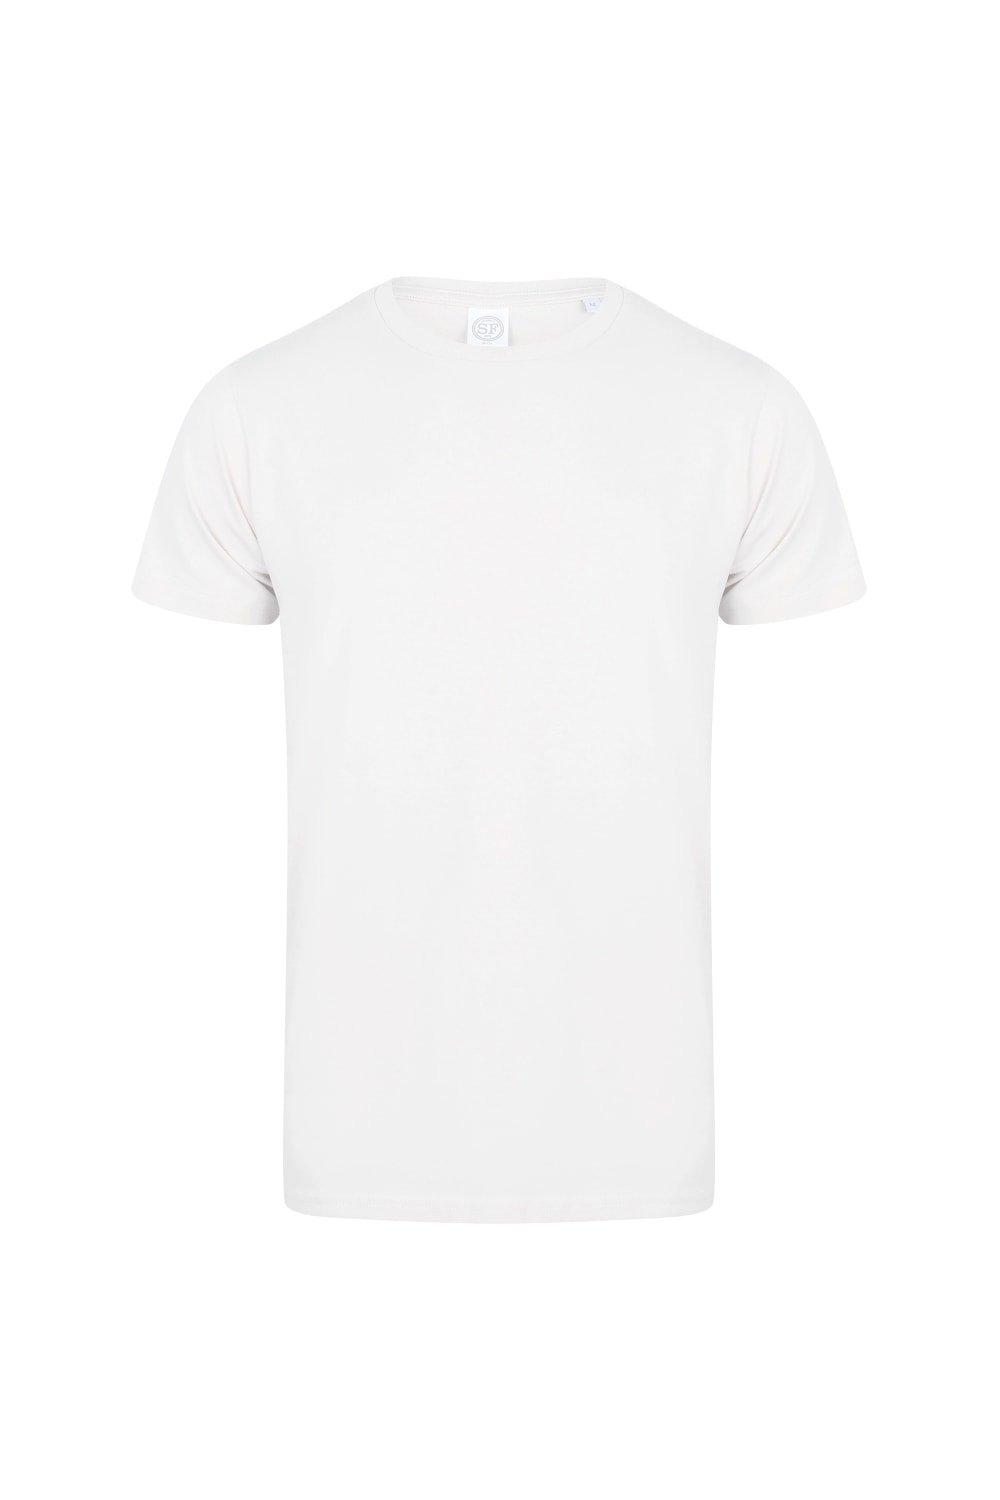 Эластичная футболка SF Minni Feel Good Skinni Fit, белый узкие спортивные брюки skinni minni с манжетами skinni fit черный